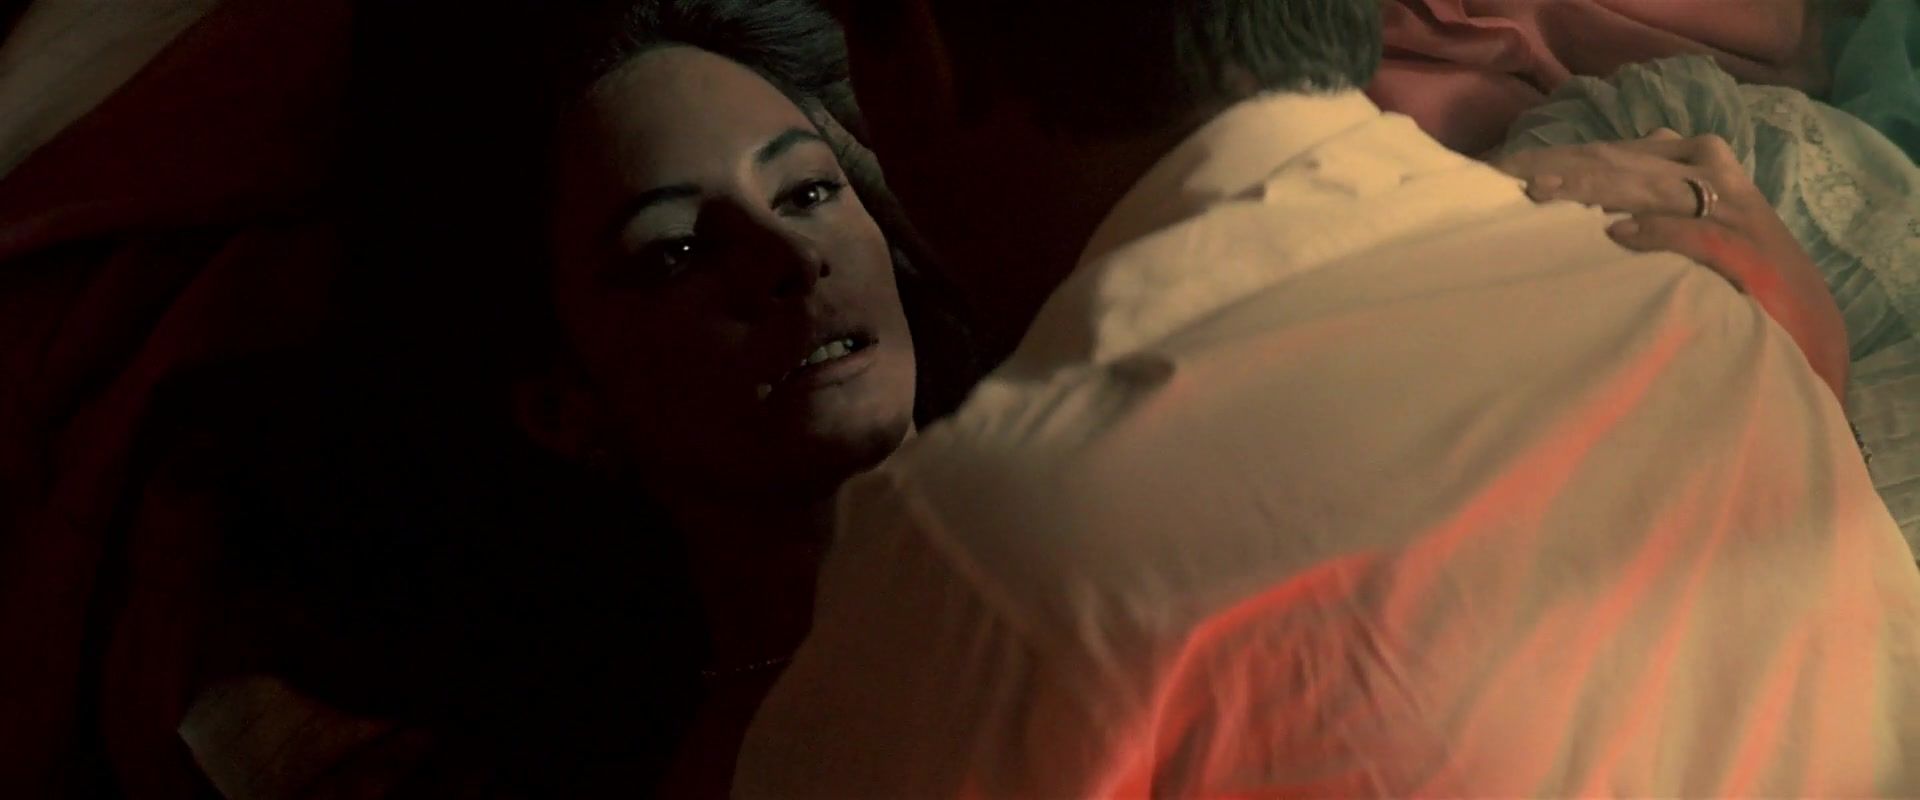 Cavala Hot Scene with actress Madeleine Stowe | The movie "Revenge" Boys